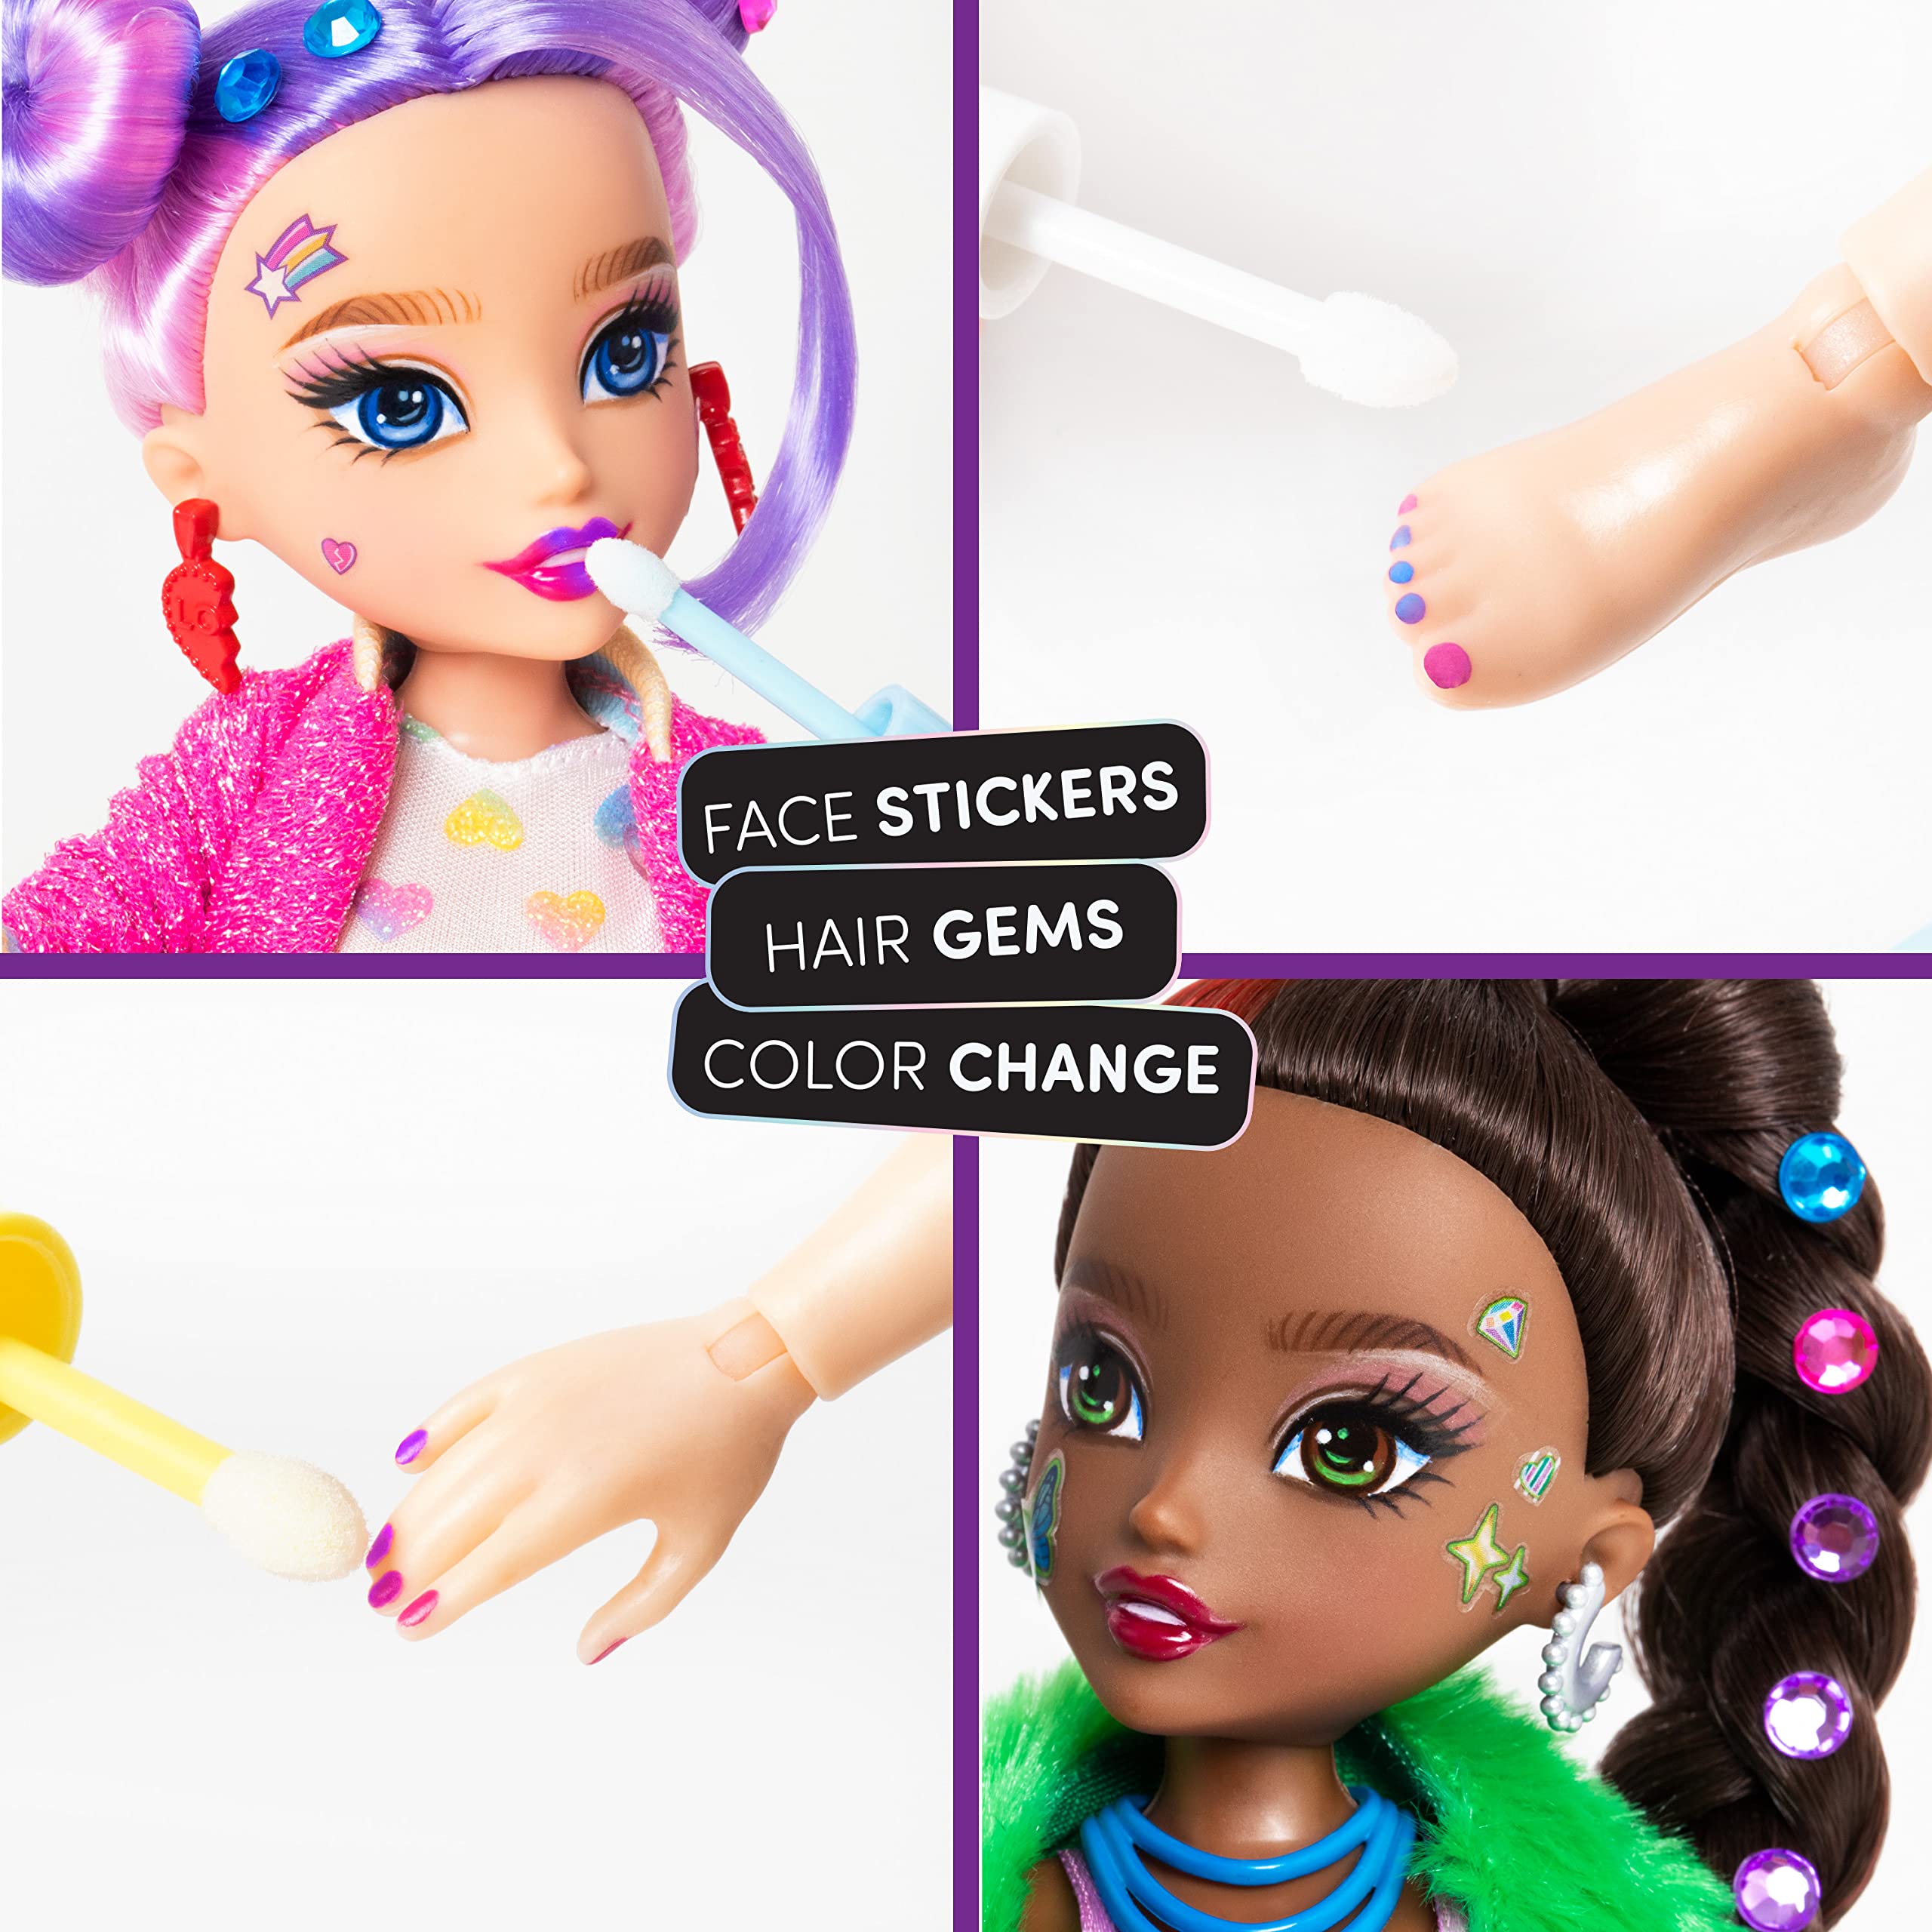 GLO-UP Girls Season 2 - Muñeca de moda Alex Latina Hispanic Girls, joyas deslumbrantes, gemas para el cabello, accesorios, moda, calcomanías faciales, maquillaje, uñas